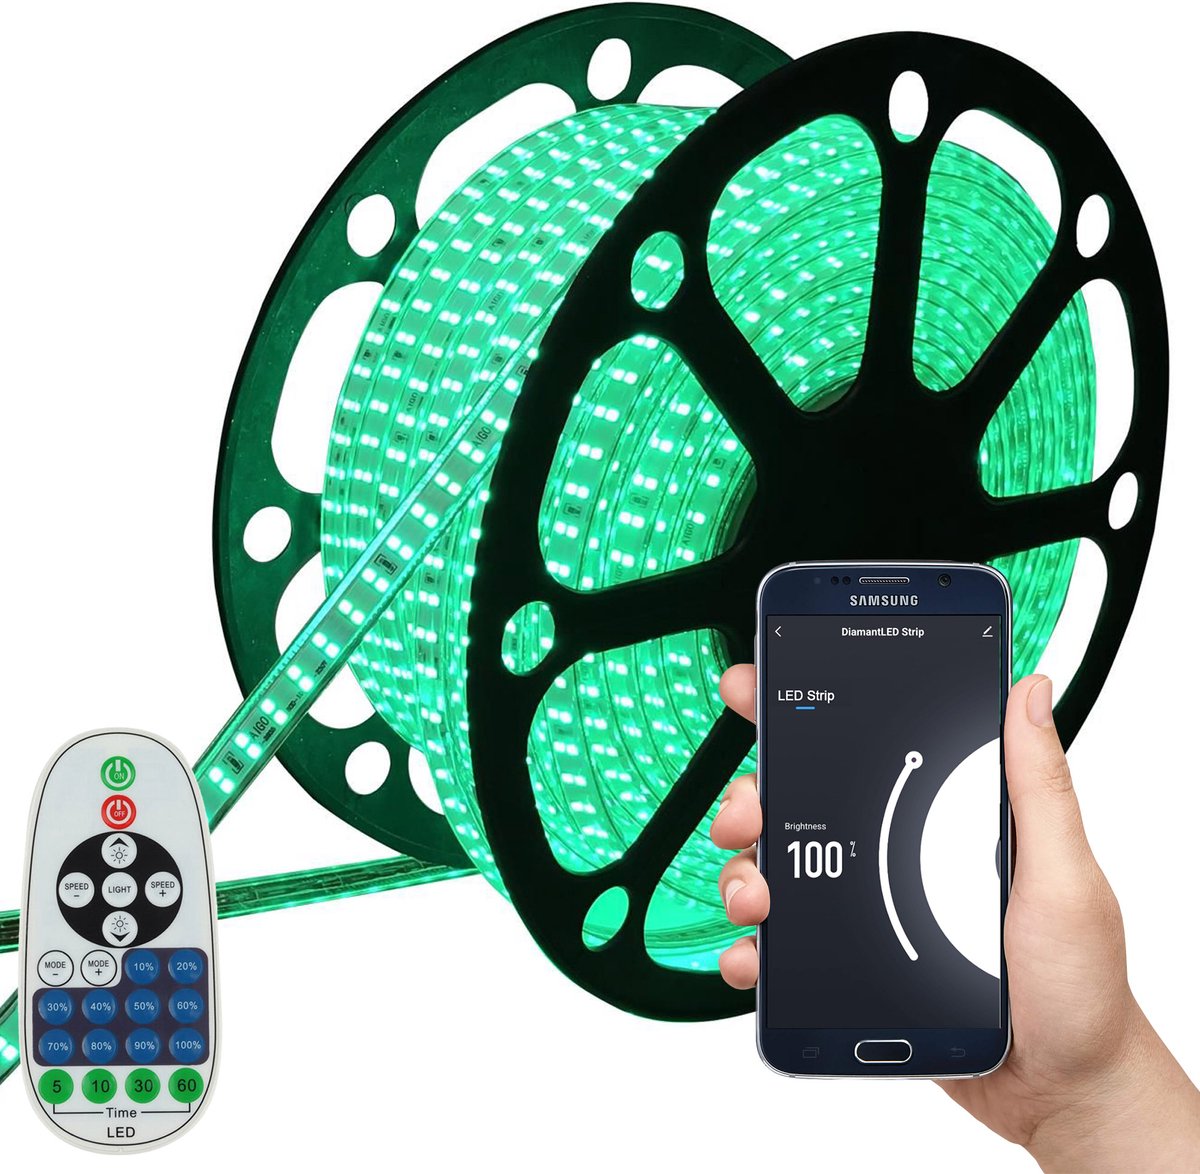 LED Strip Groen - 50 Meter aan één stuk - 180 LED's per meter - Met Wi-Fi App + IR 23 knops afstandsbediening - Smarthome - Google Home/Amazon Alexa - Waterdicht - Makkelijke mobiele App voor bedienen inclusief afstandsbediening - iOS en Android